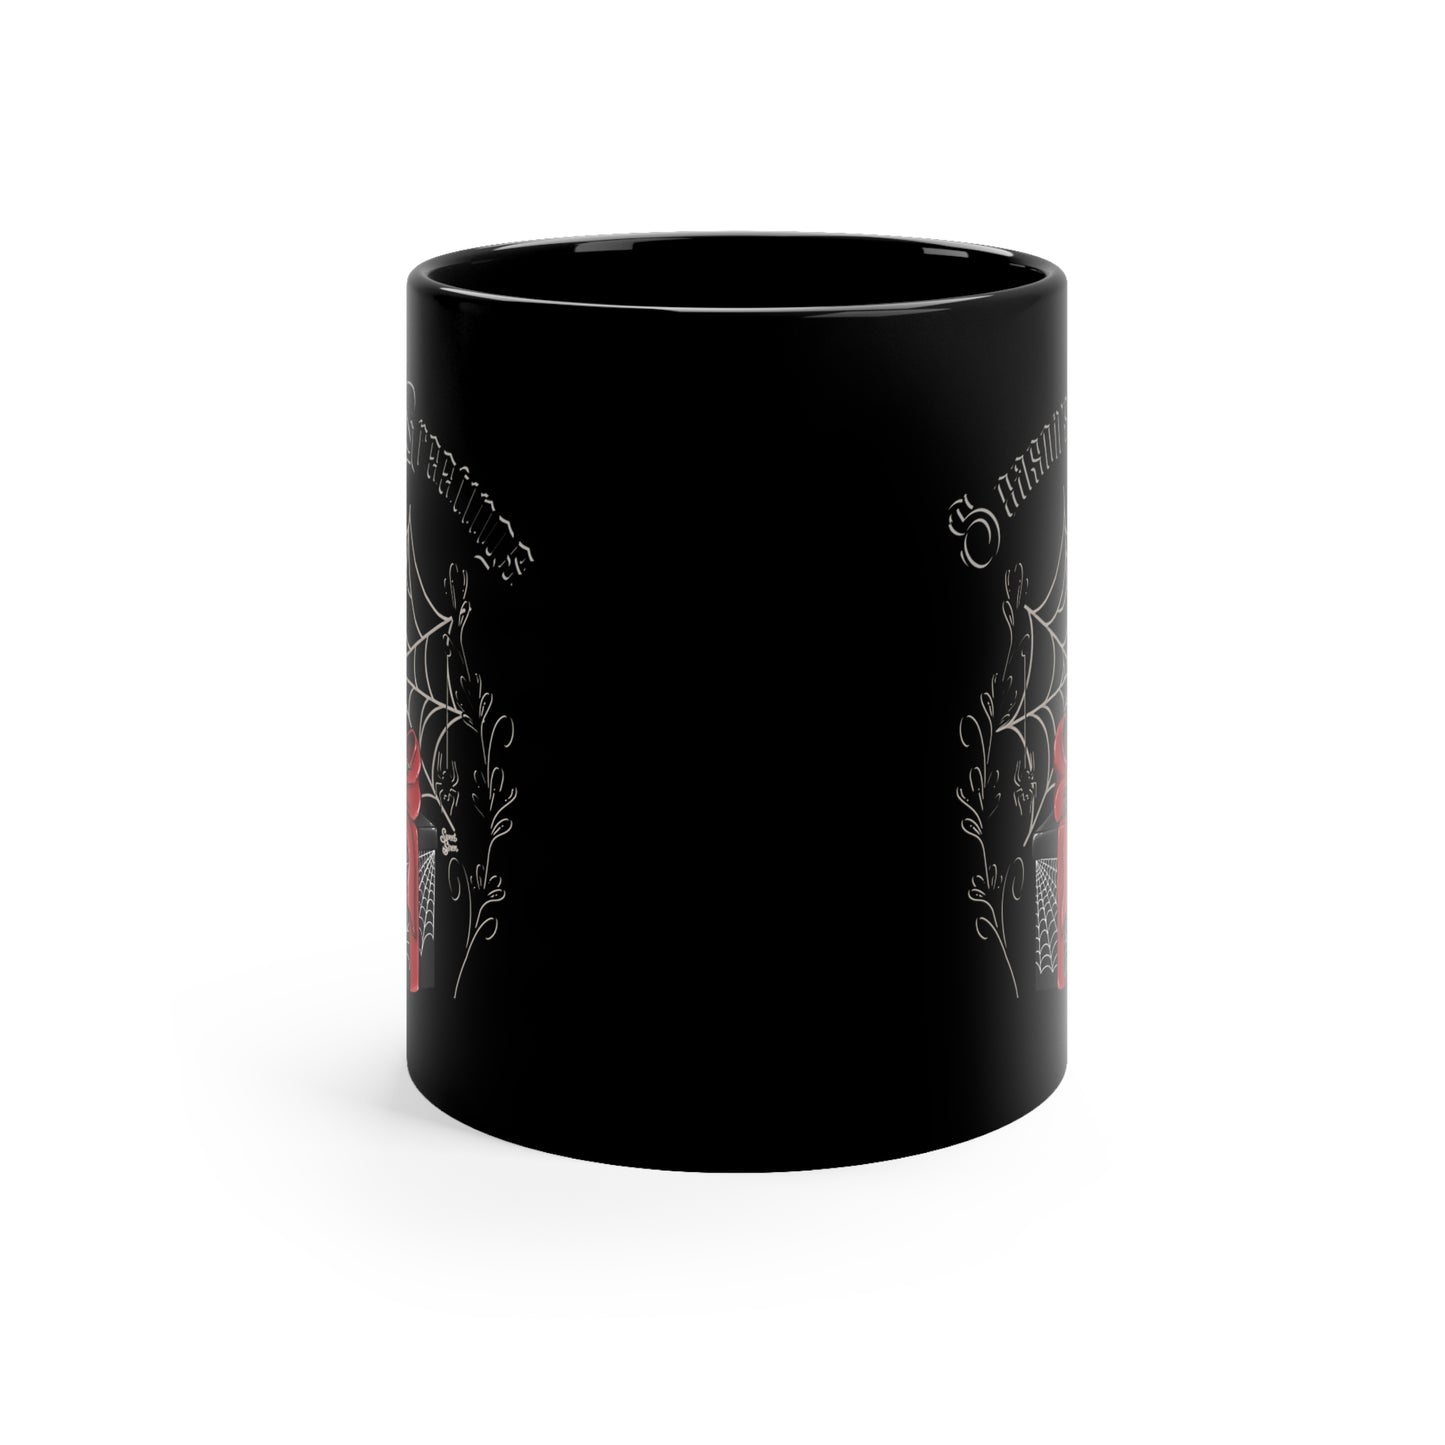 Season's Greetings Spiderweb Present -  11oz Black Mug